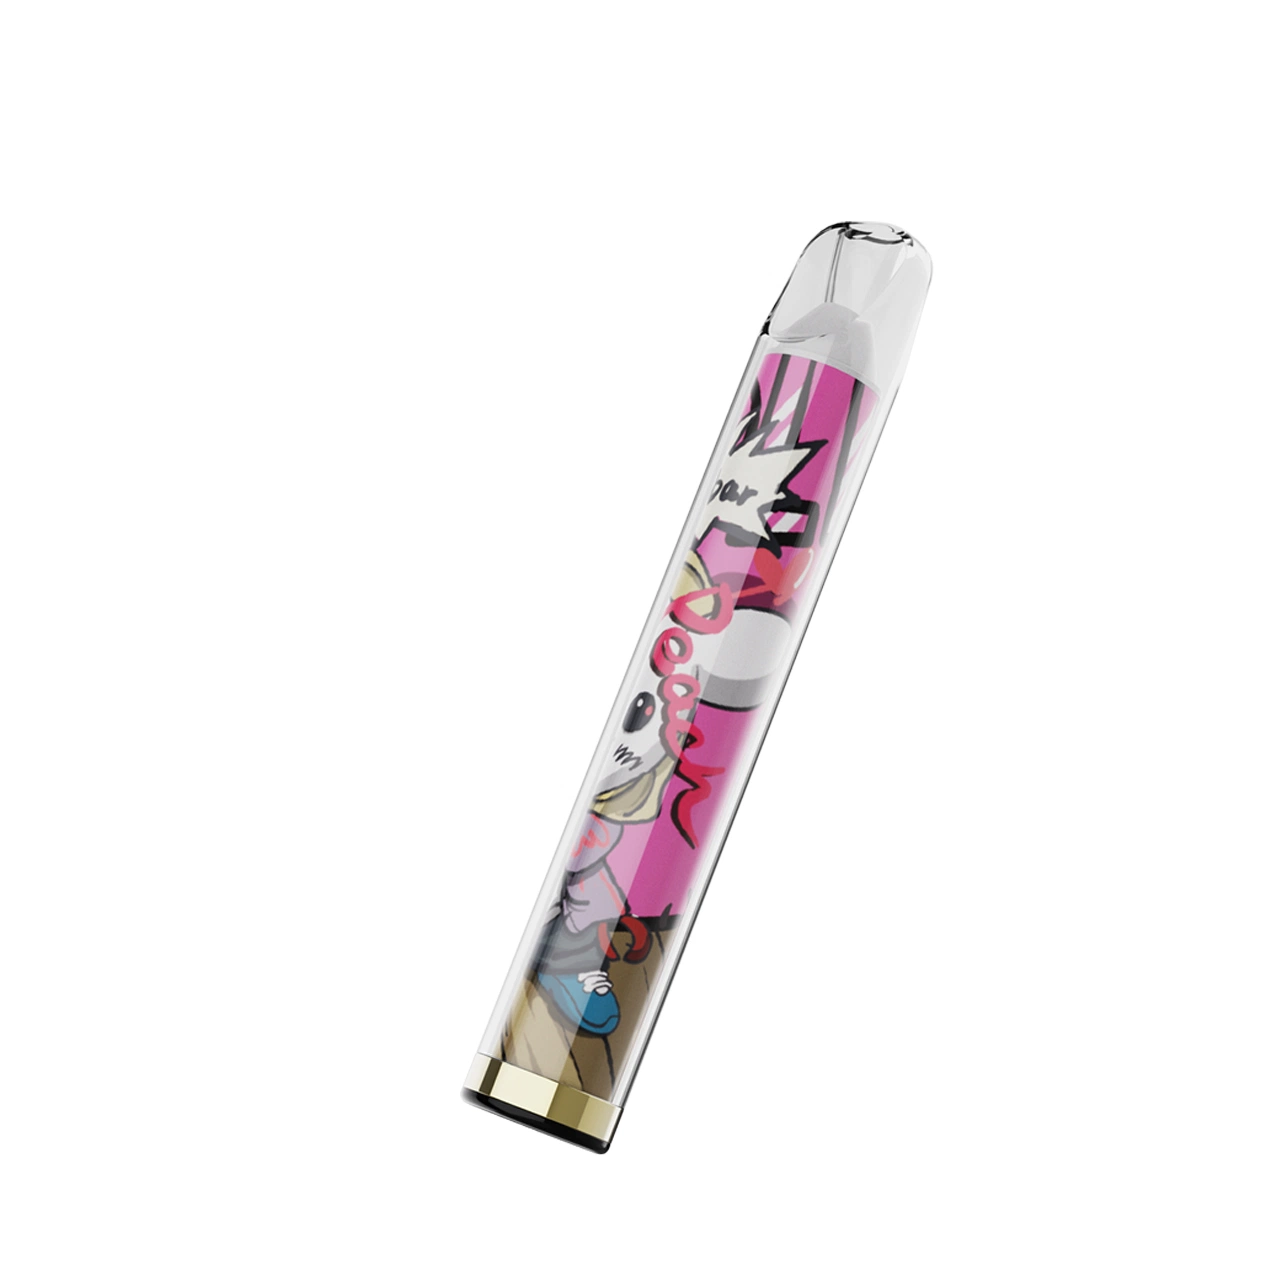 OEM und ODM Service 550 mAh Akku 11 Flavors Pen-Style-E-Zigarette